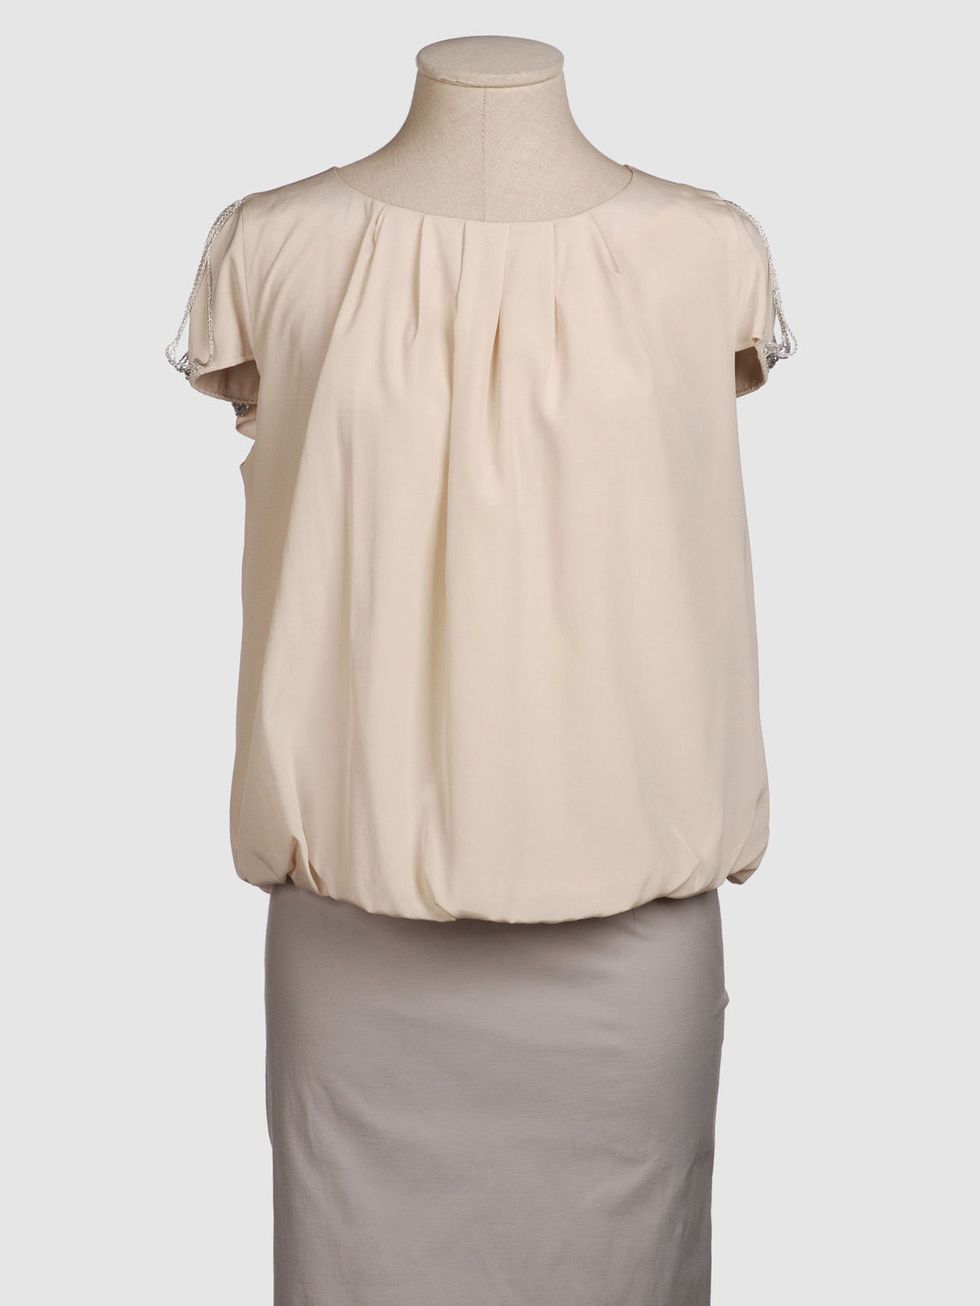 Brown, Sleeve, Shoulder, Textile, White, Khaki, Dress, Fashion, One-piece garment, Day dress, 